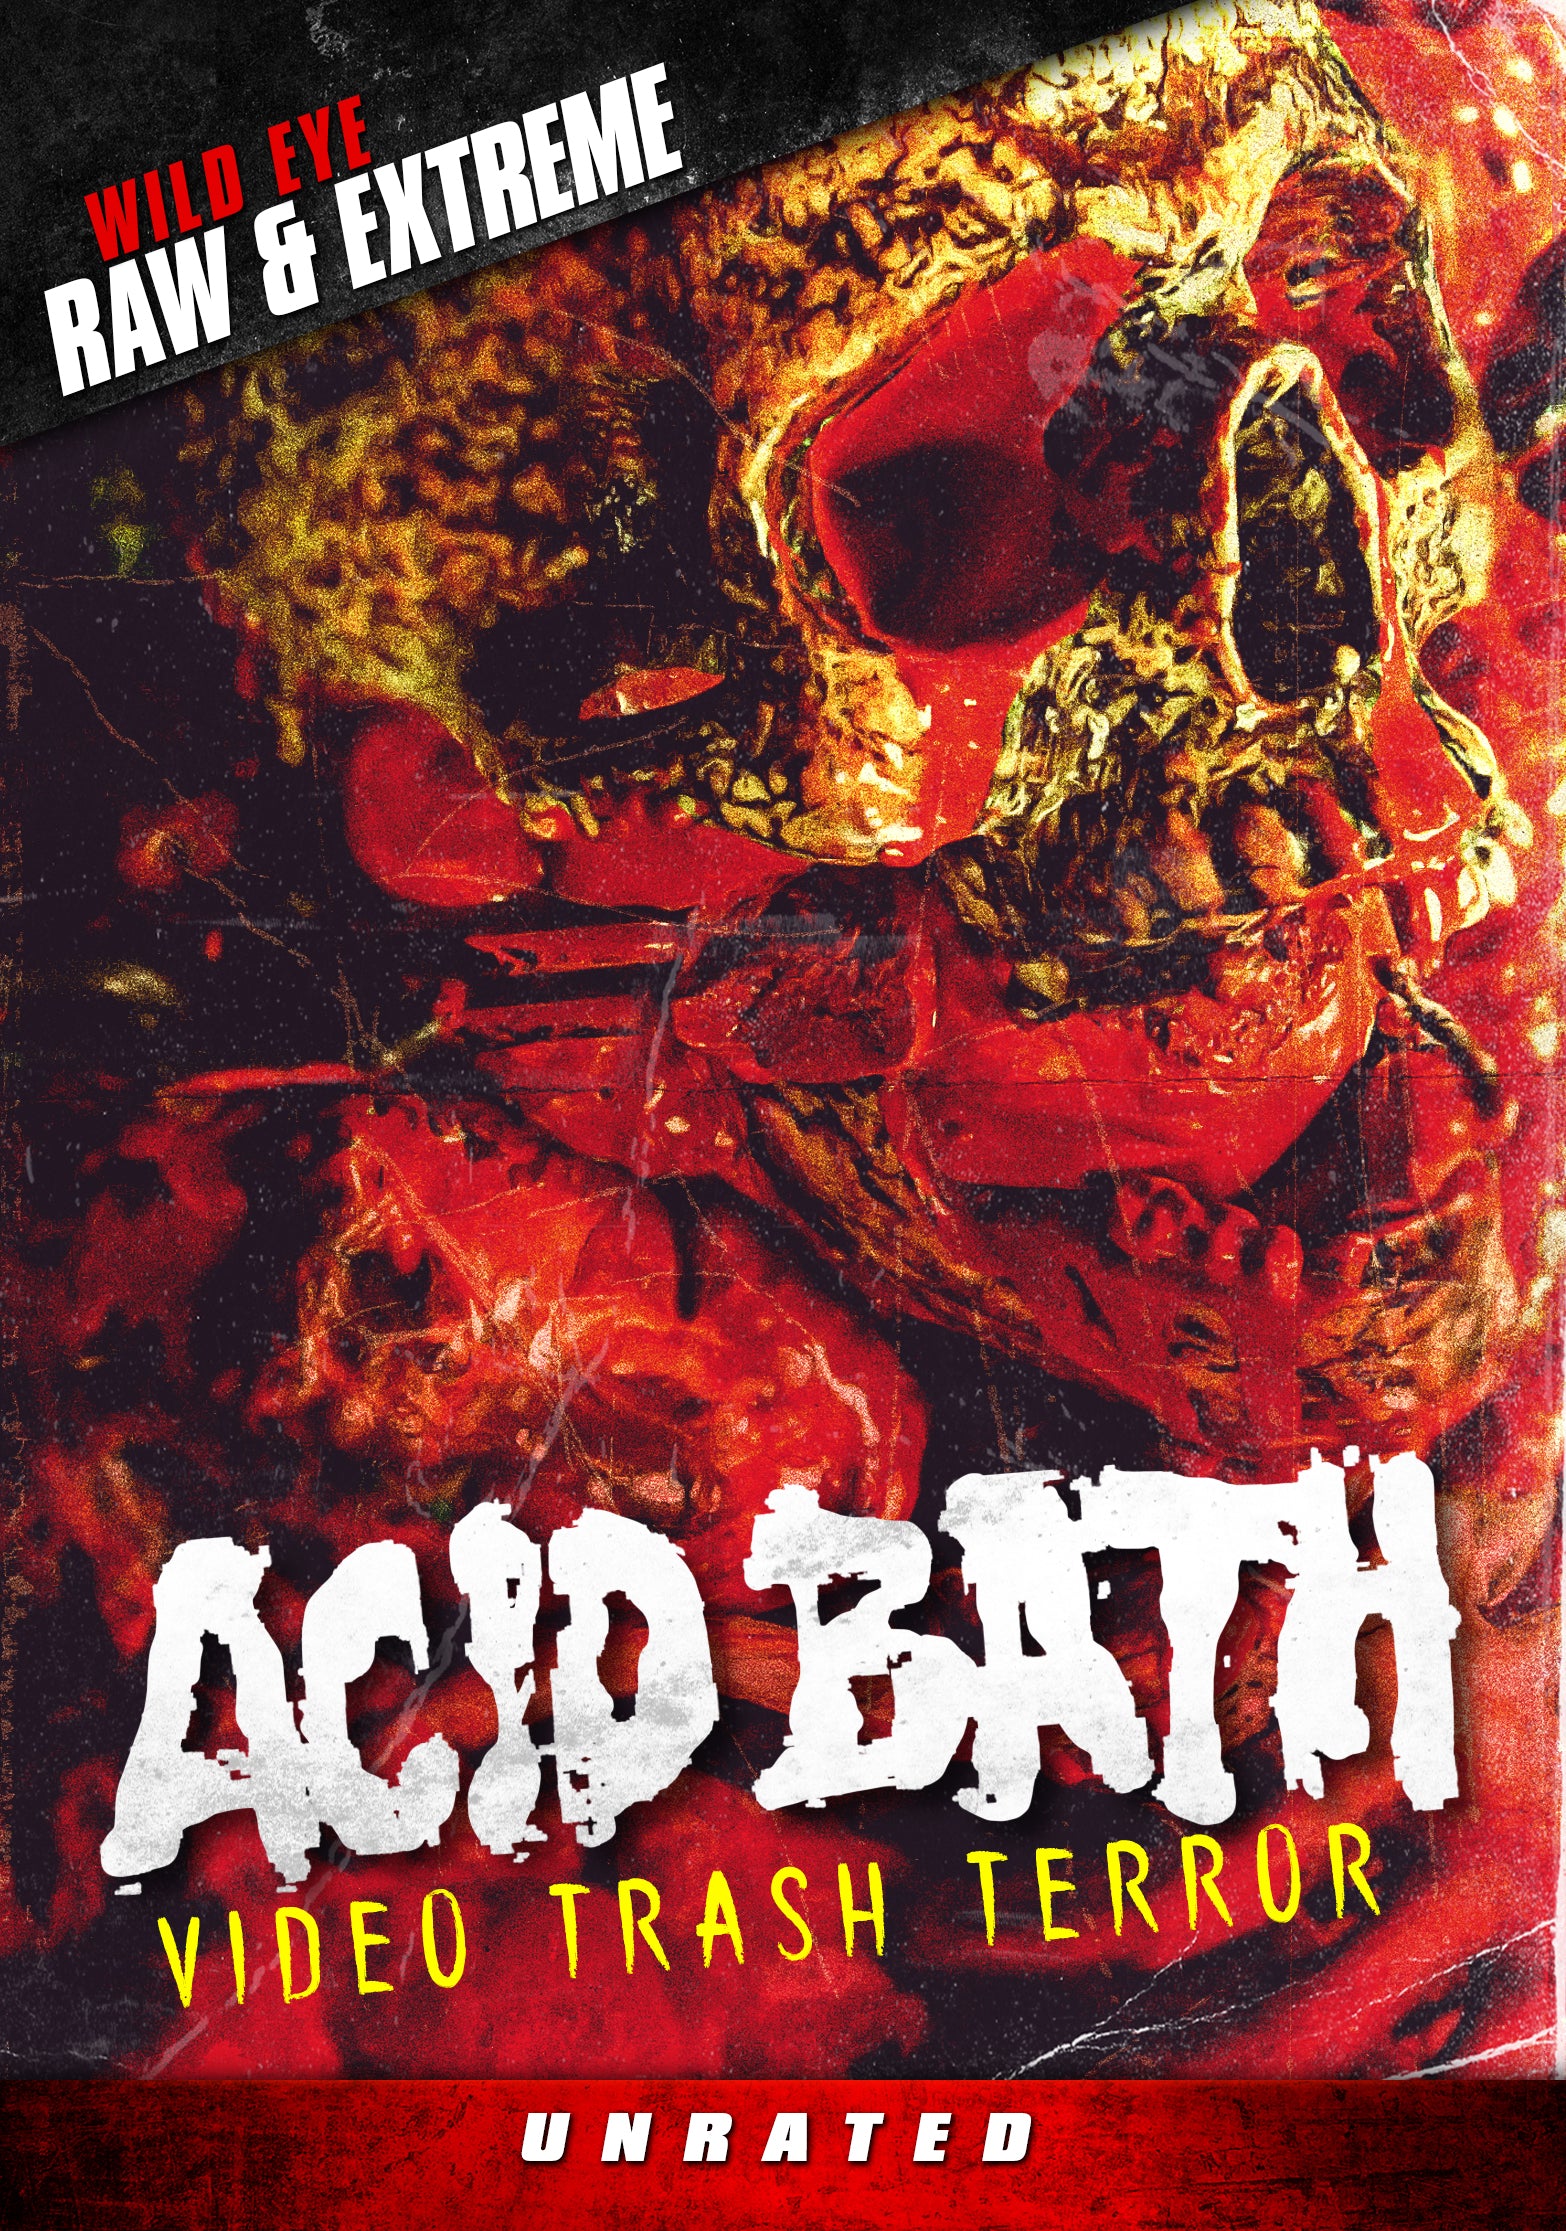 ACID BATH DVD